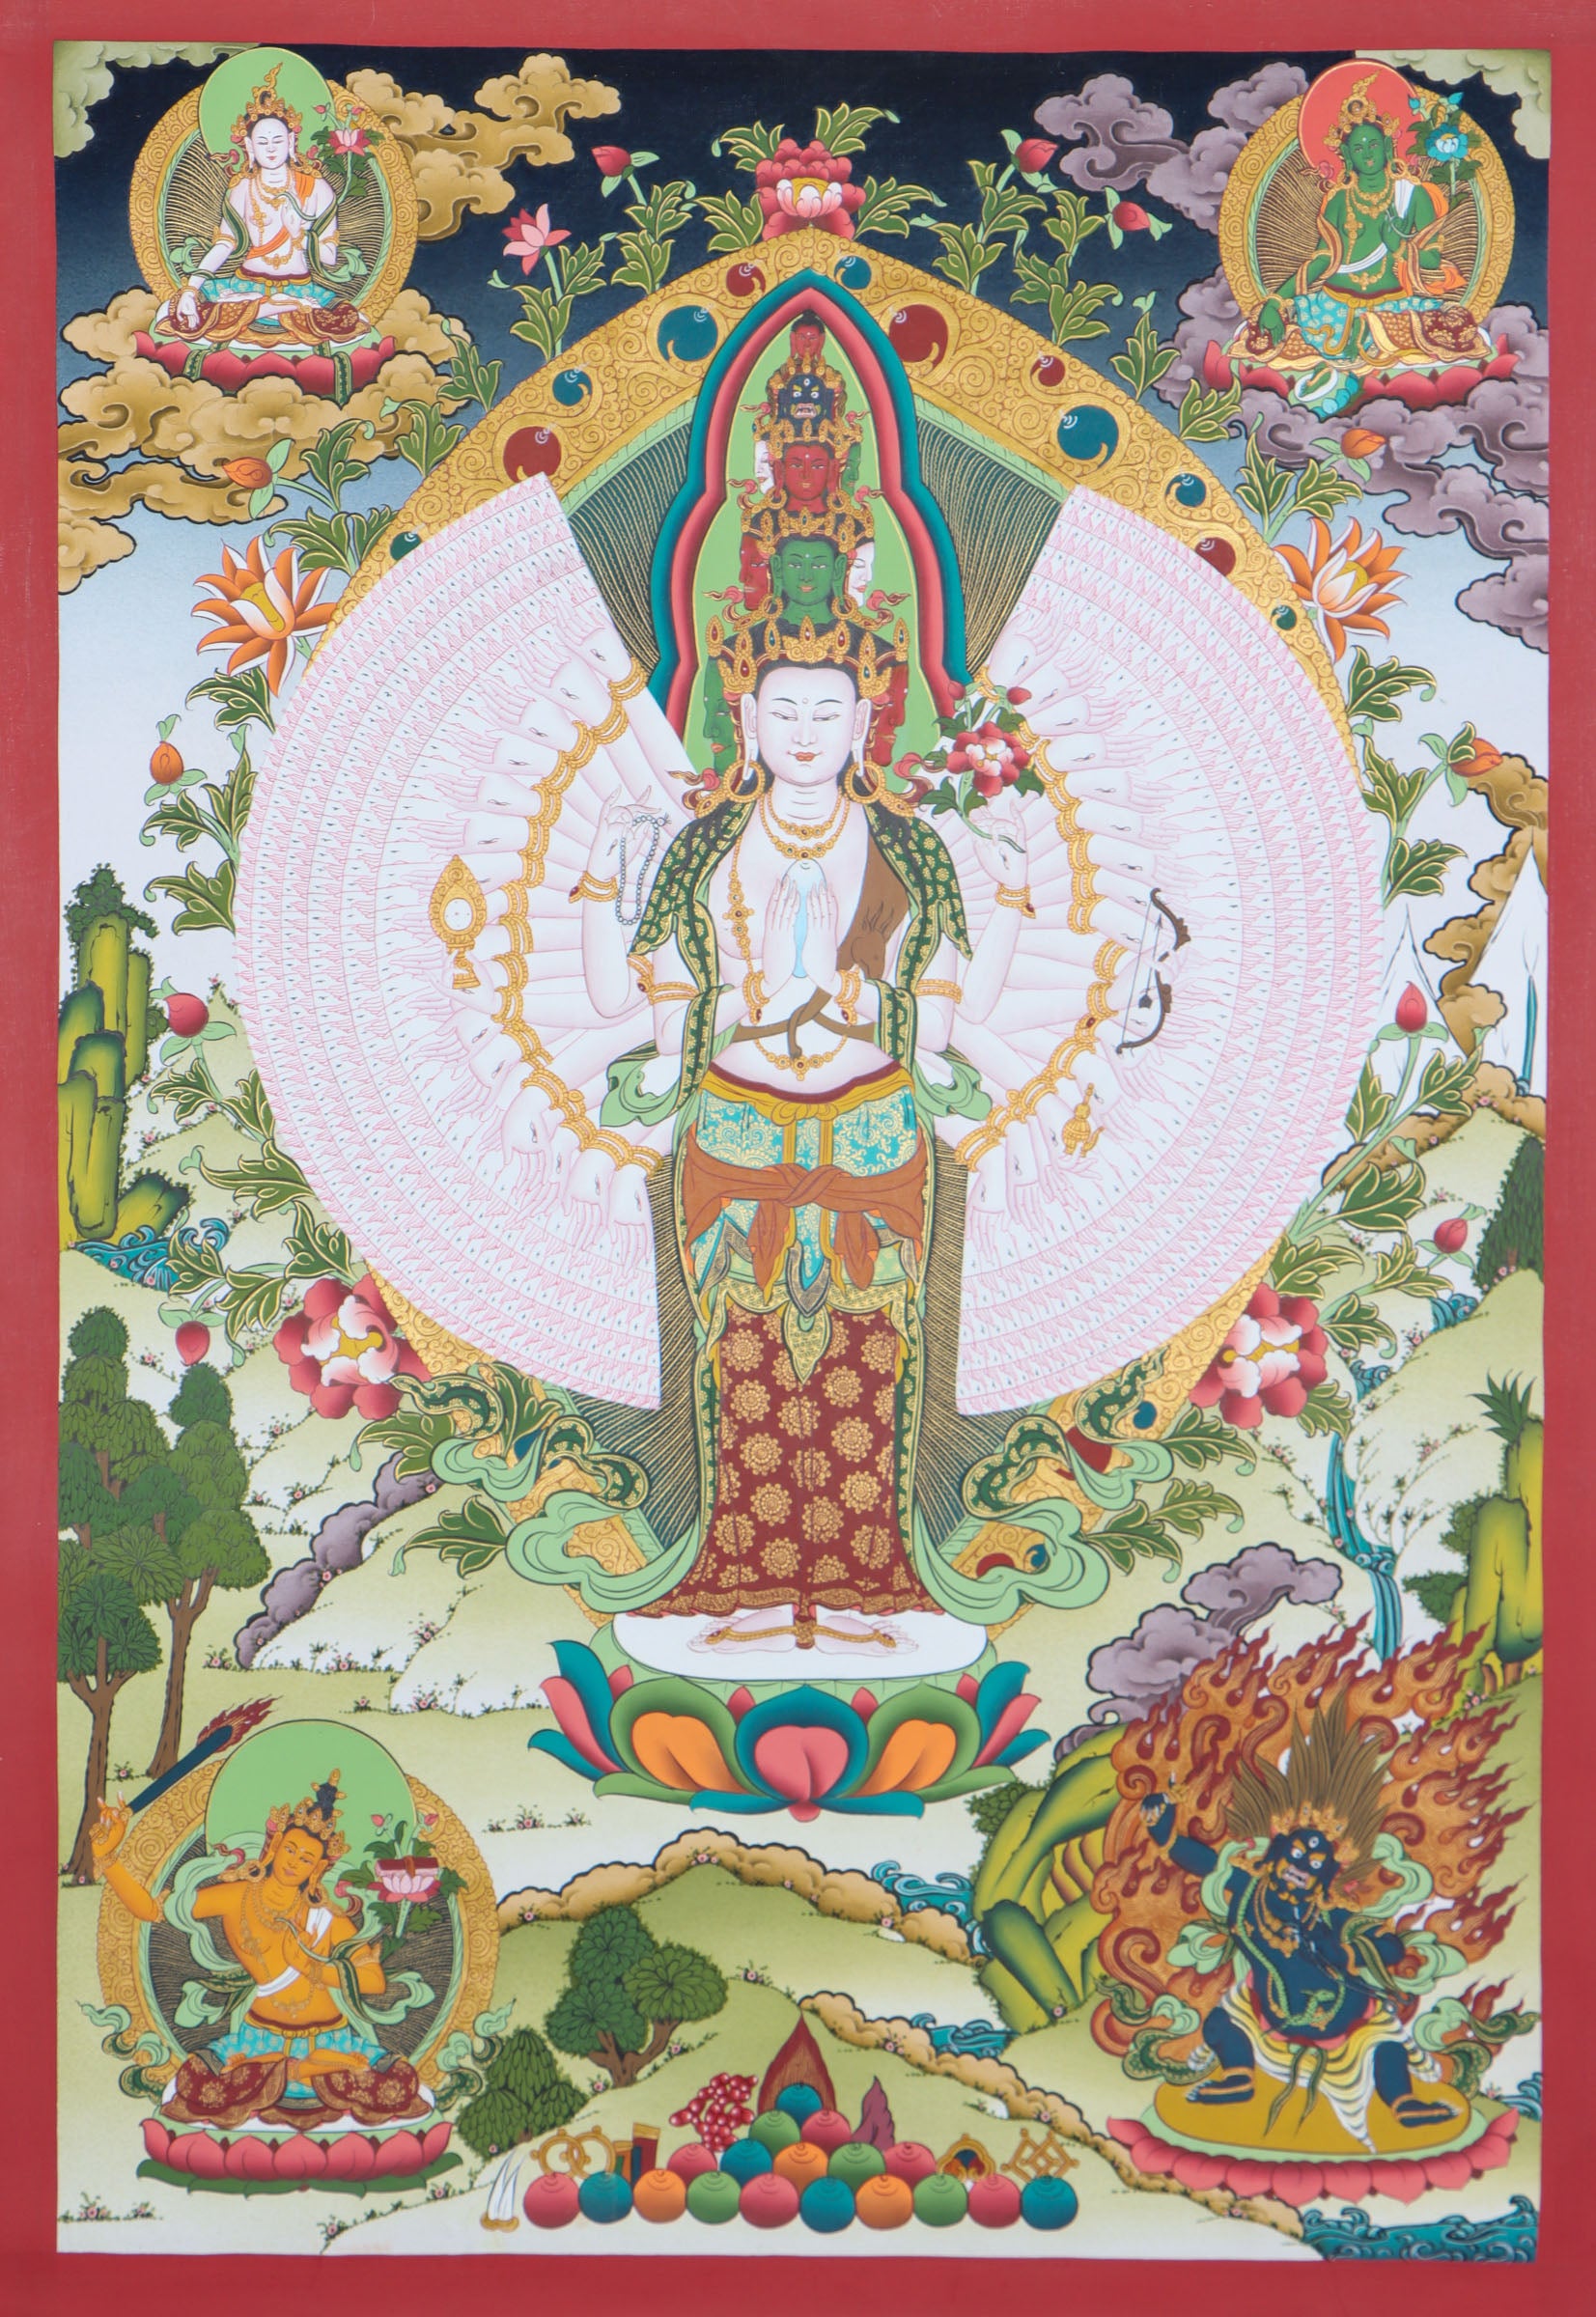 Avalokiteshvara Thangka Painting for religious rites and rituals.